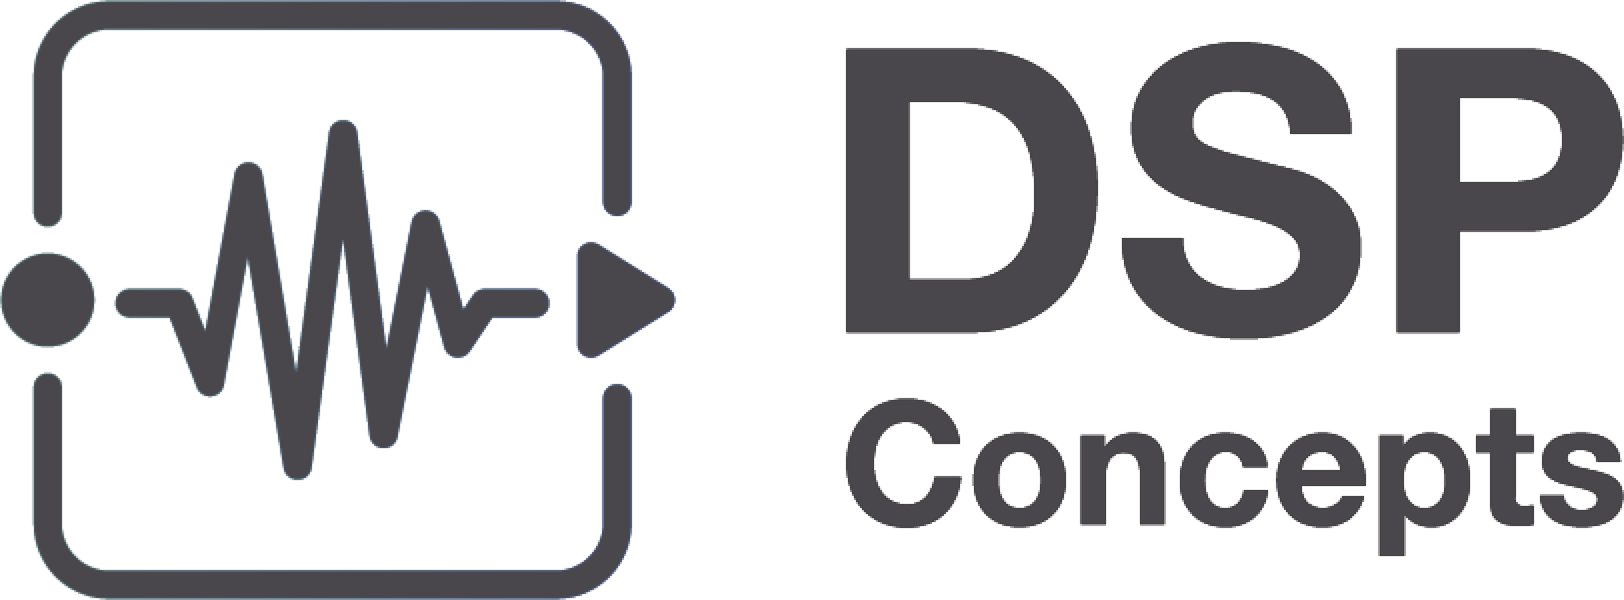 DSP Concepts logo